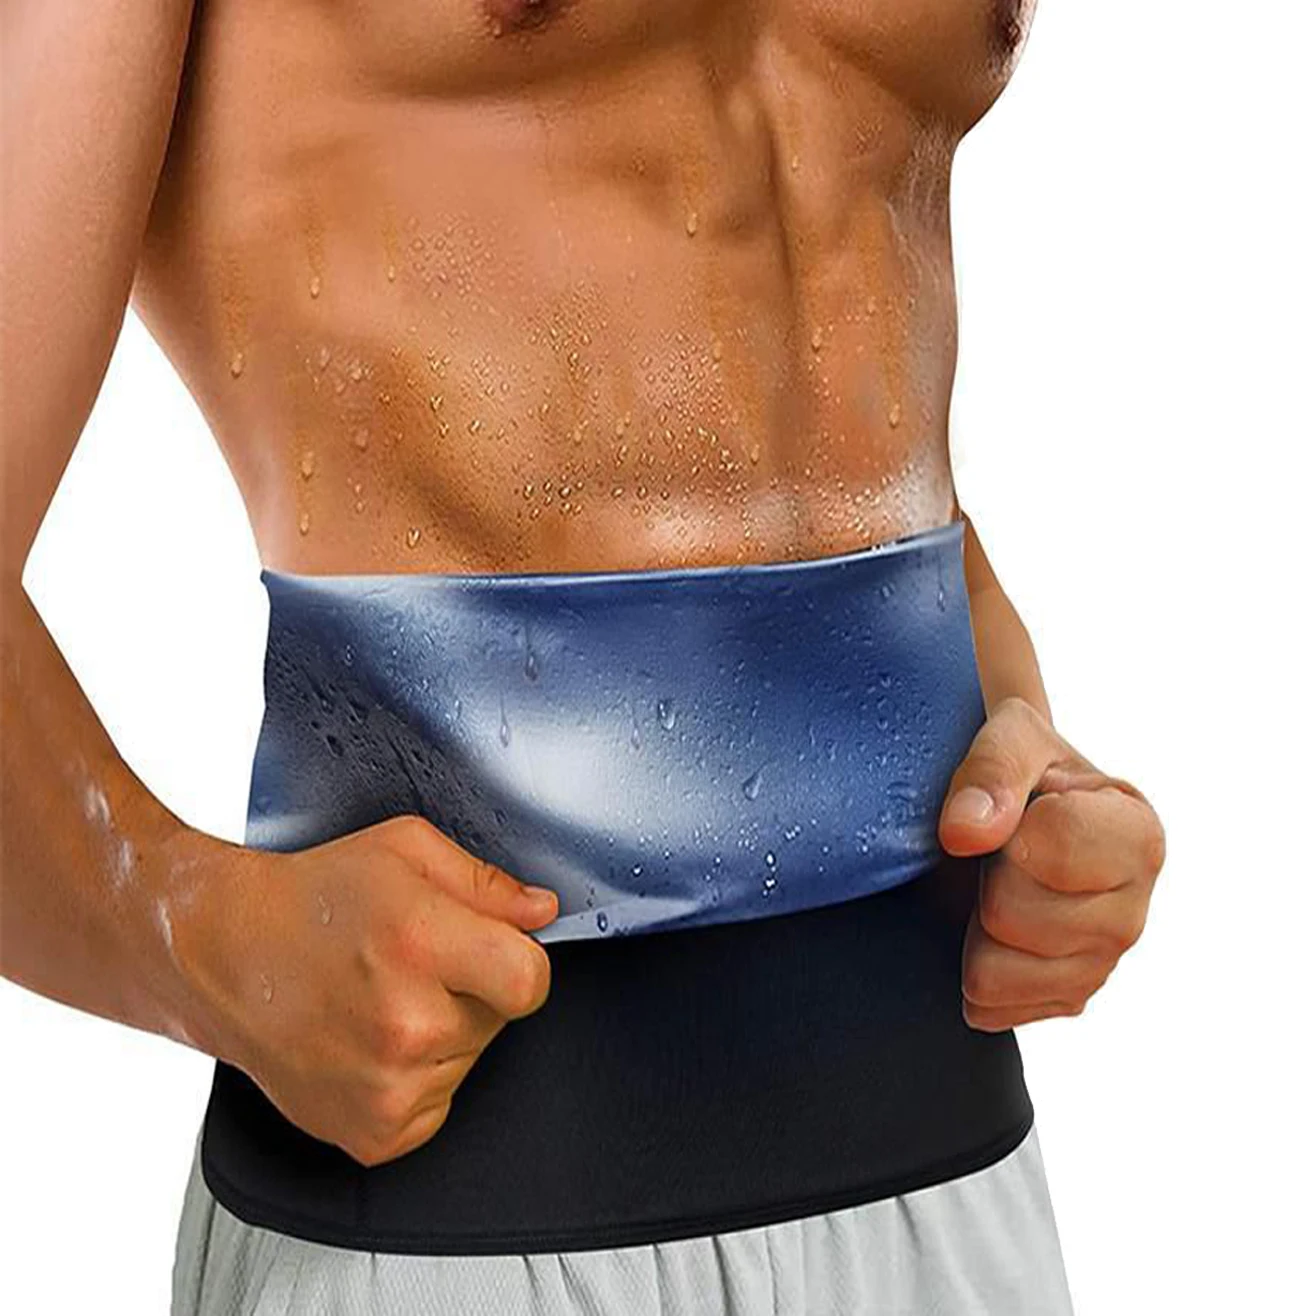 

Custom Logo Gym Belly Burn Fat Waist Trainer Hot Body Shaper Workout Weight Loss Waist Trimmer Sauna Slim Sweat Belt, Black with blue lining/black with silver lining